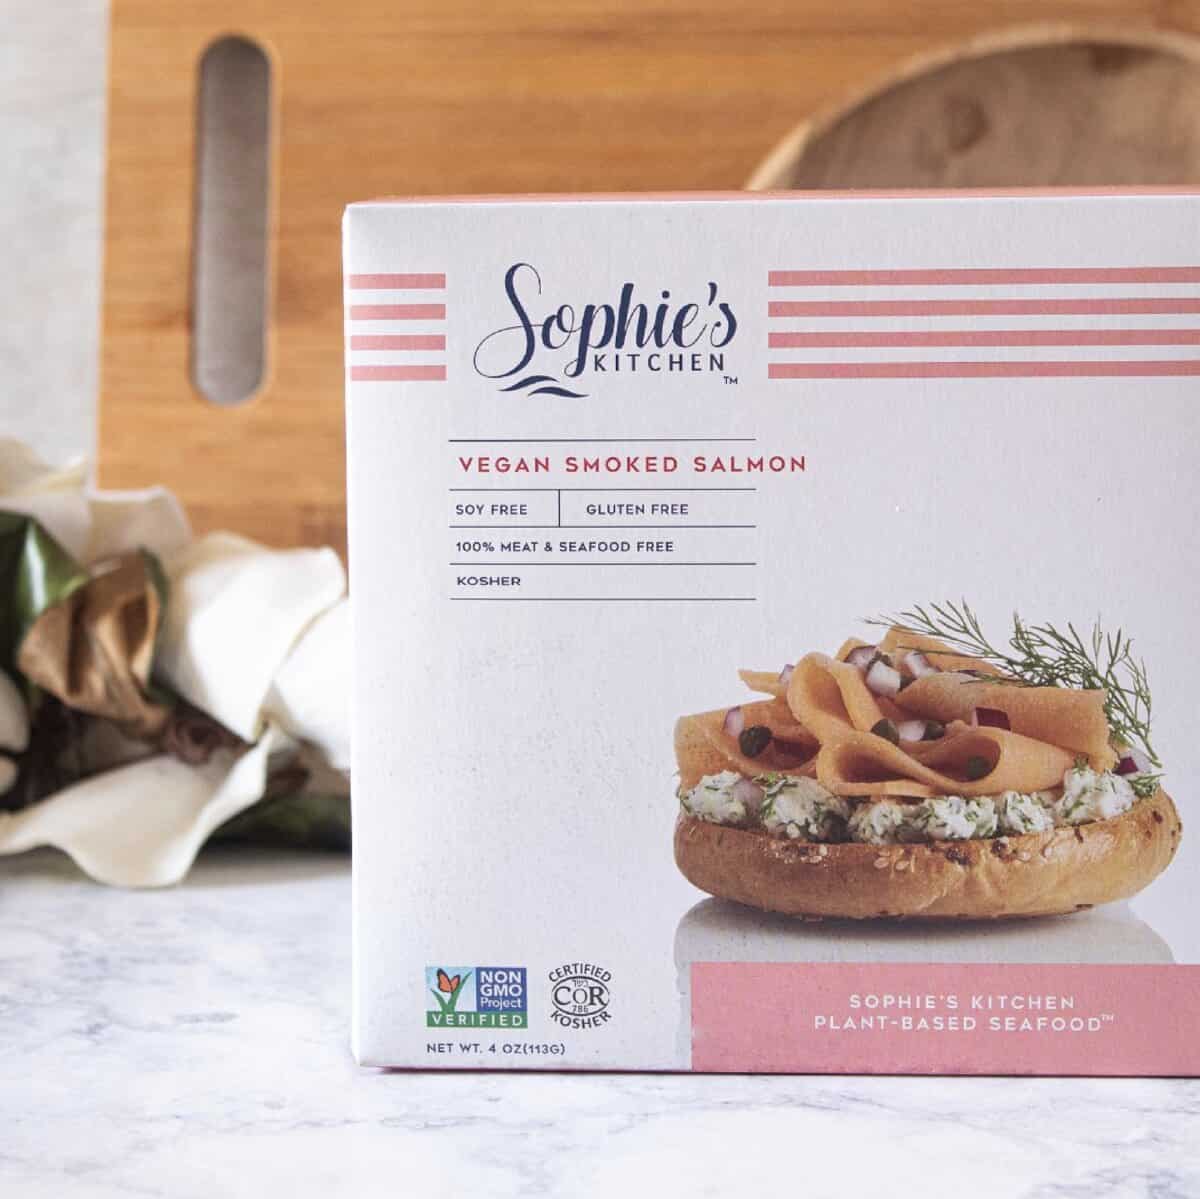 Sophies Kitchen vegan smoked salmon fish in a box